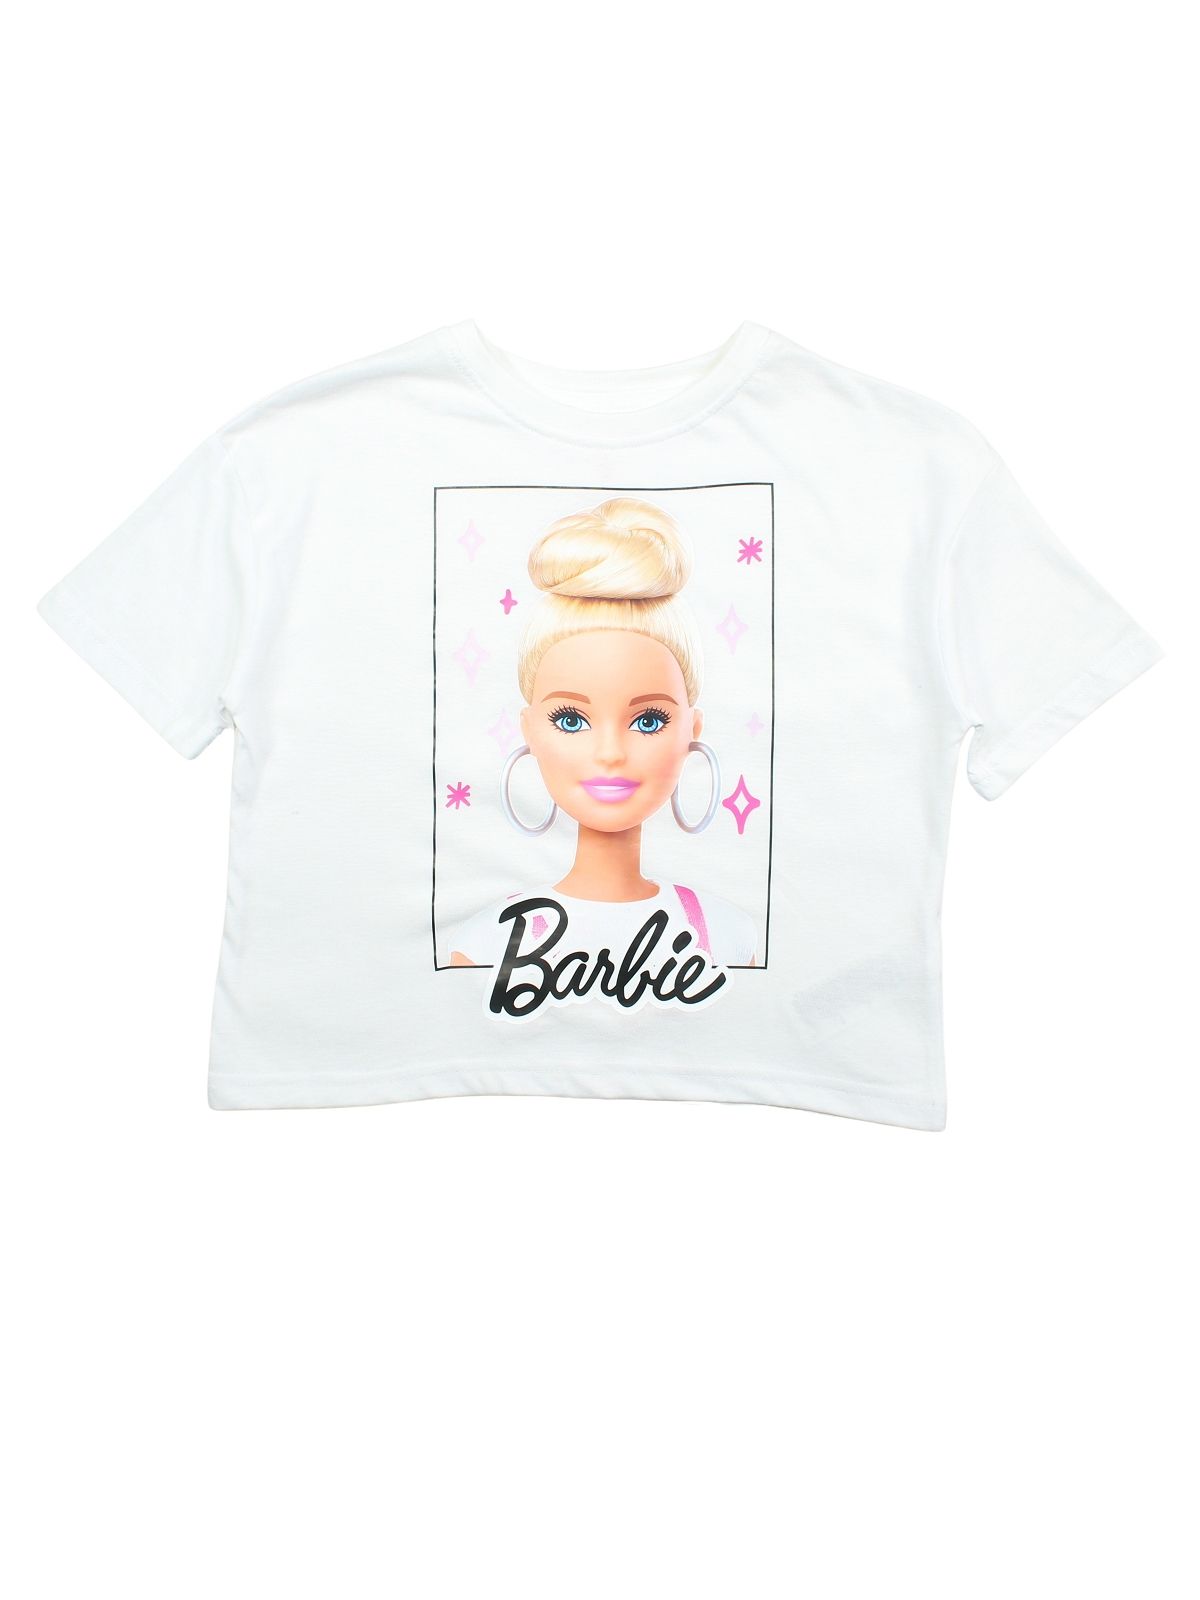 Barbie set.